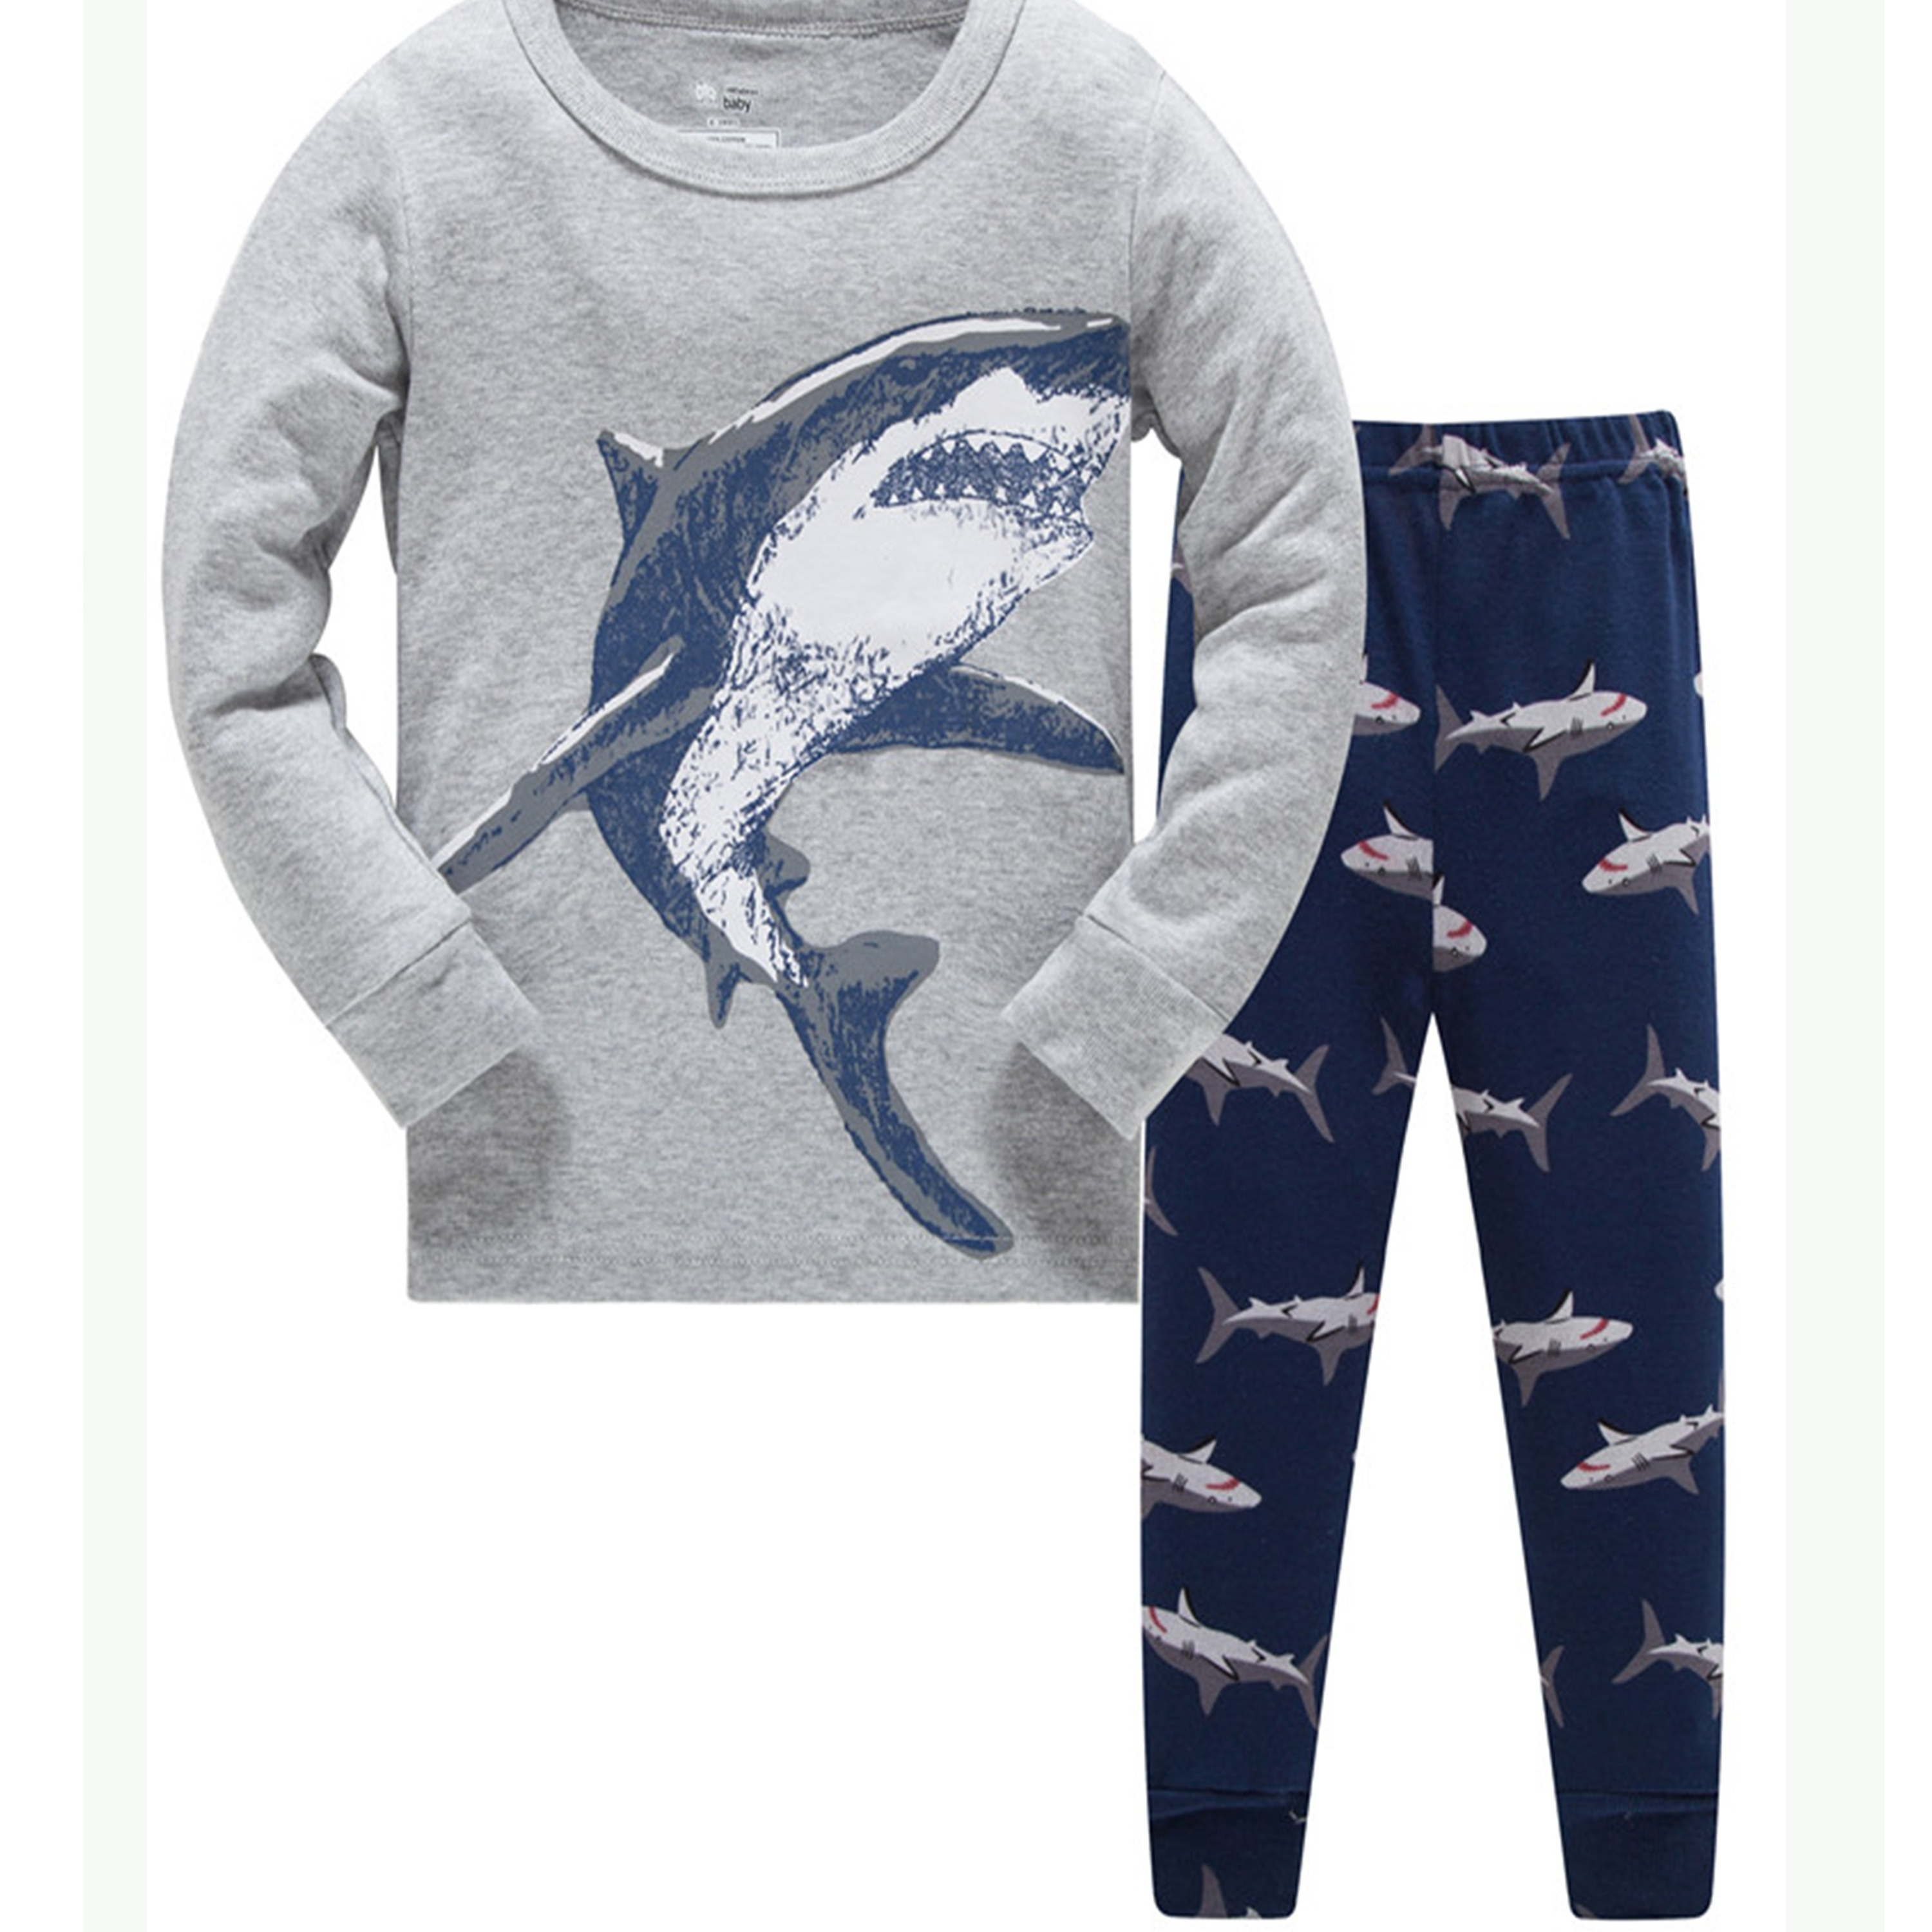 

Boys 2-piece Trendy Pajama Sets Cartoon Shark Pattern Round Neck Long Sleeve Top & Matching Pants Comfy Casual Pj Sets